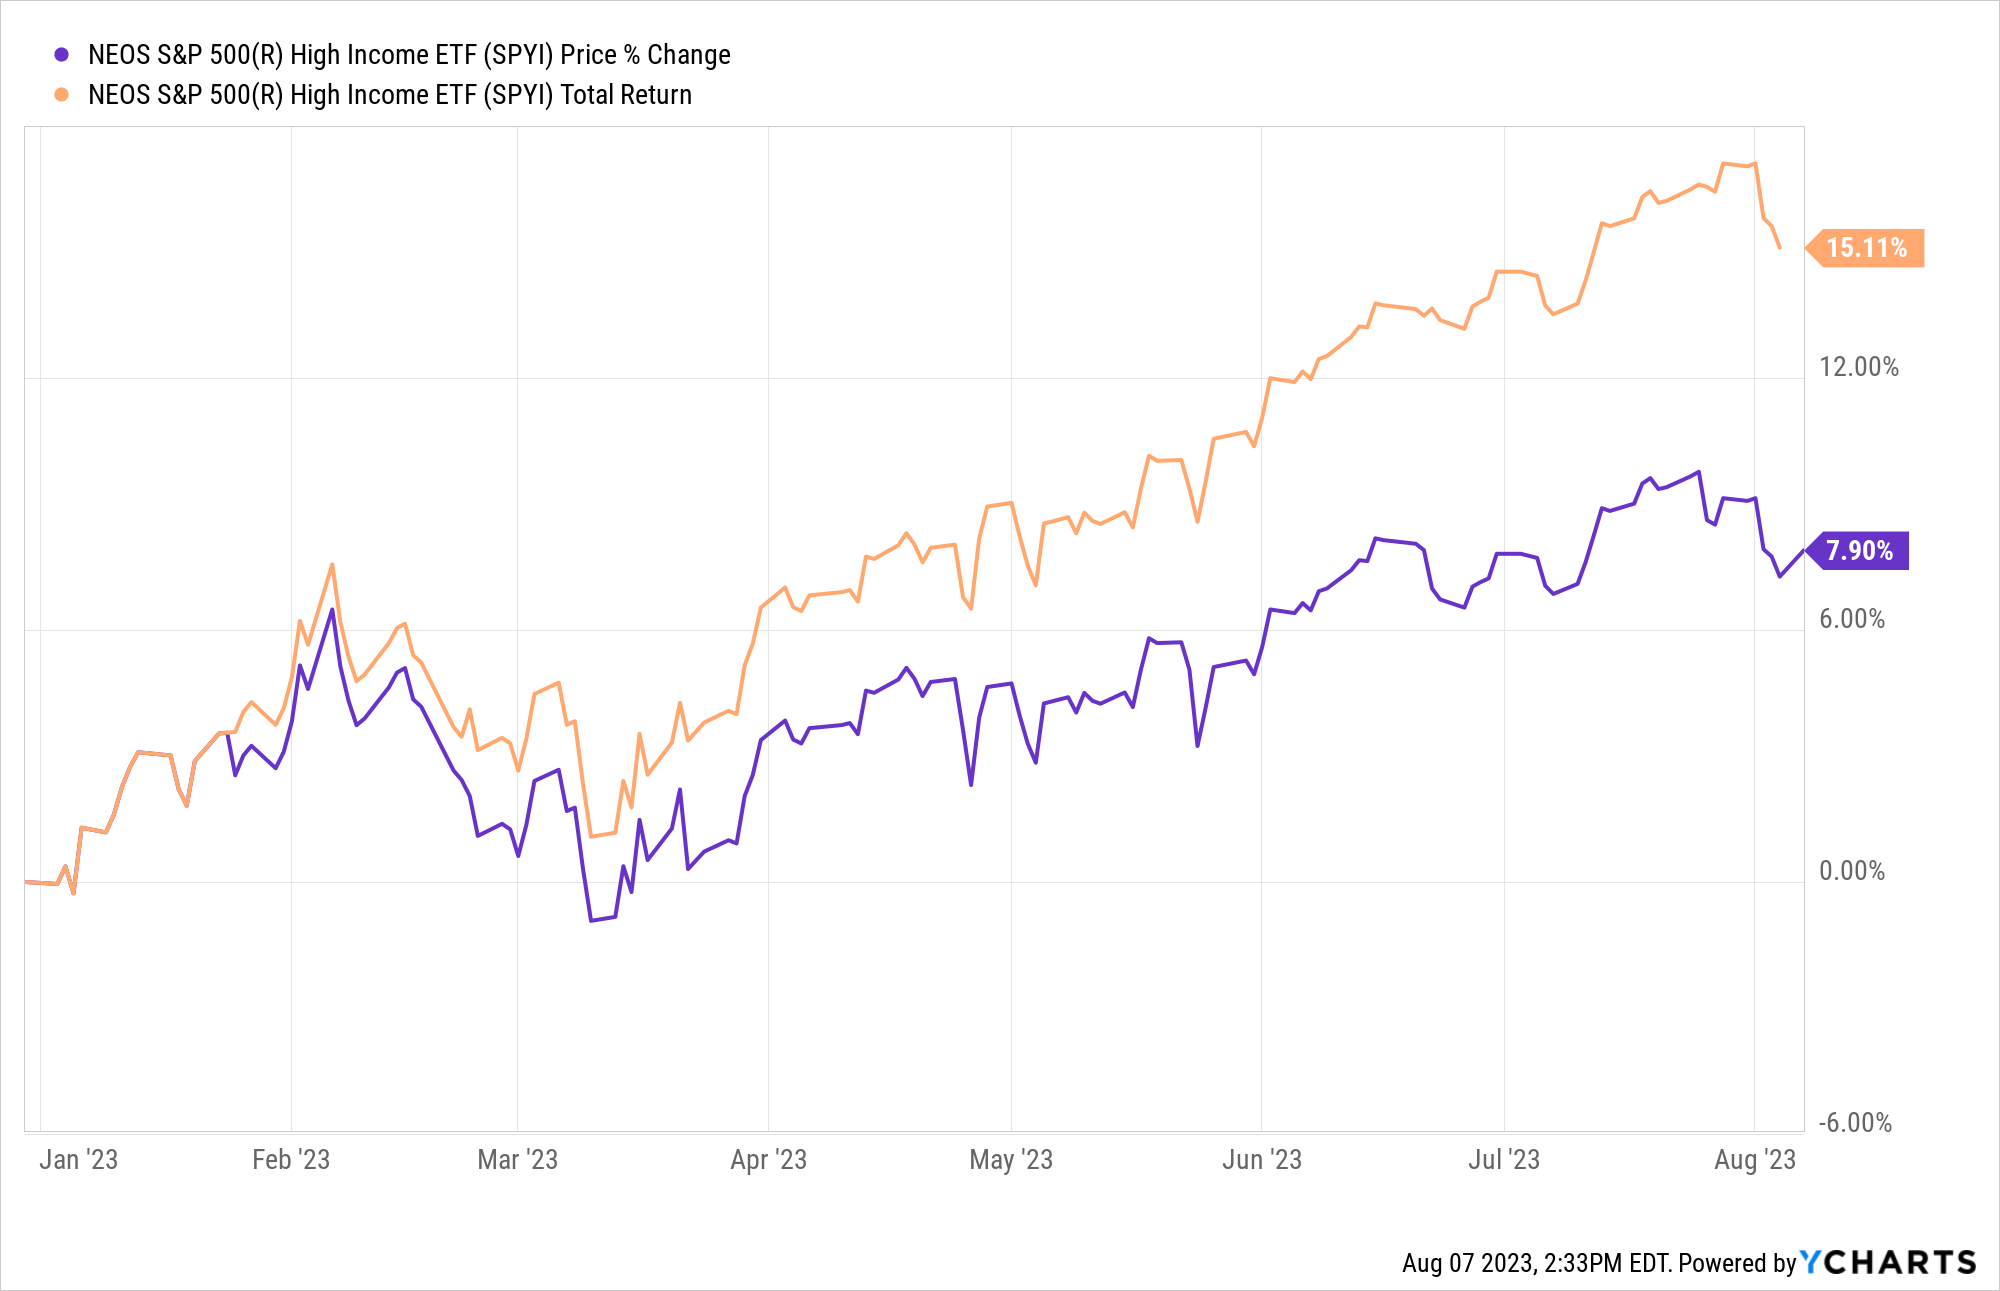 Chart of SPYI price returns YTD (7.90%) and total returns (15.11%). 